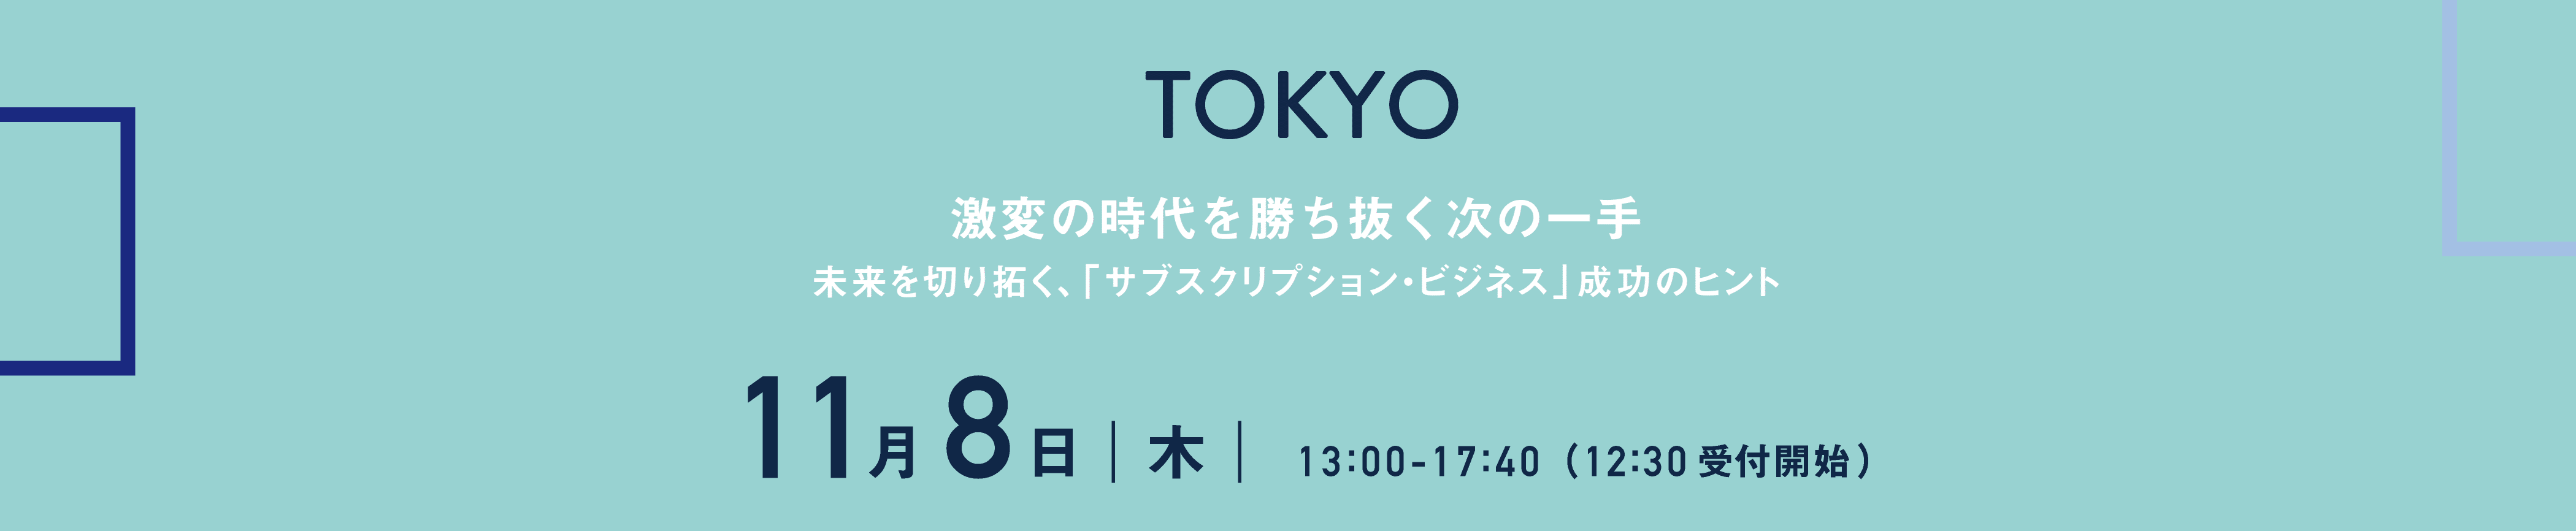 Subscribed Tokyo 2018